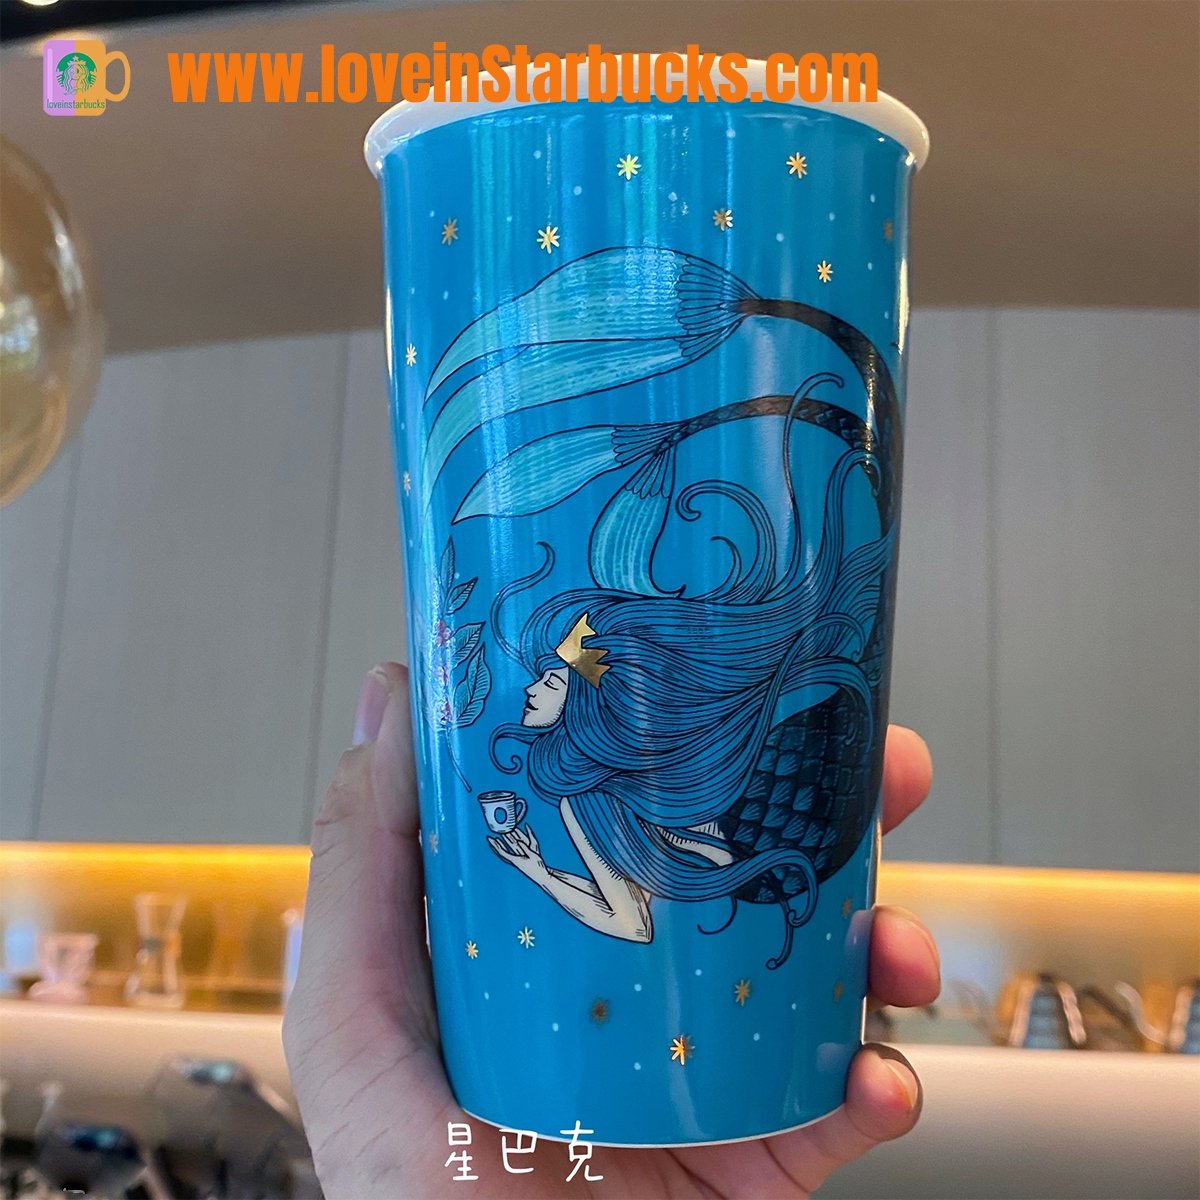 Bodum Starbucks Mermaid double wall glasses mug cup w/ handle & lid14 oz